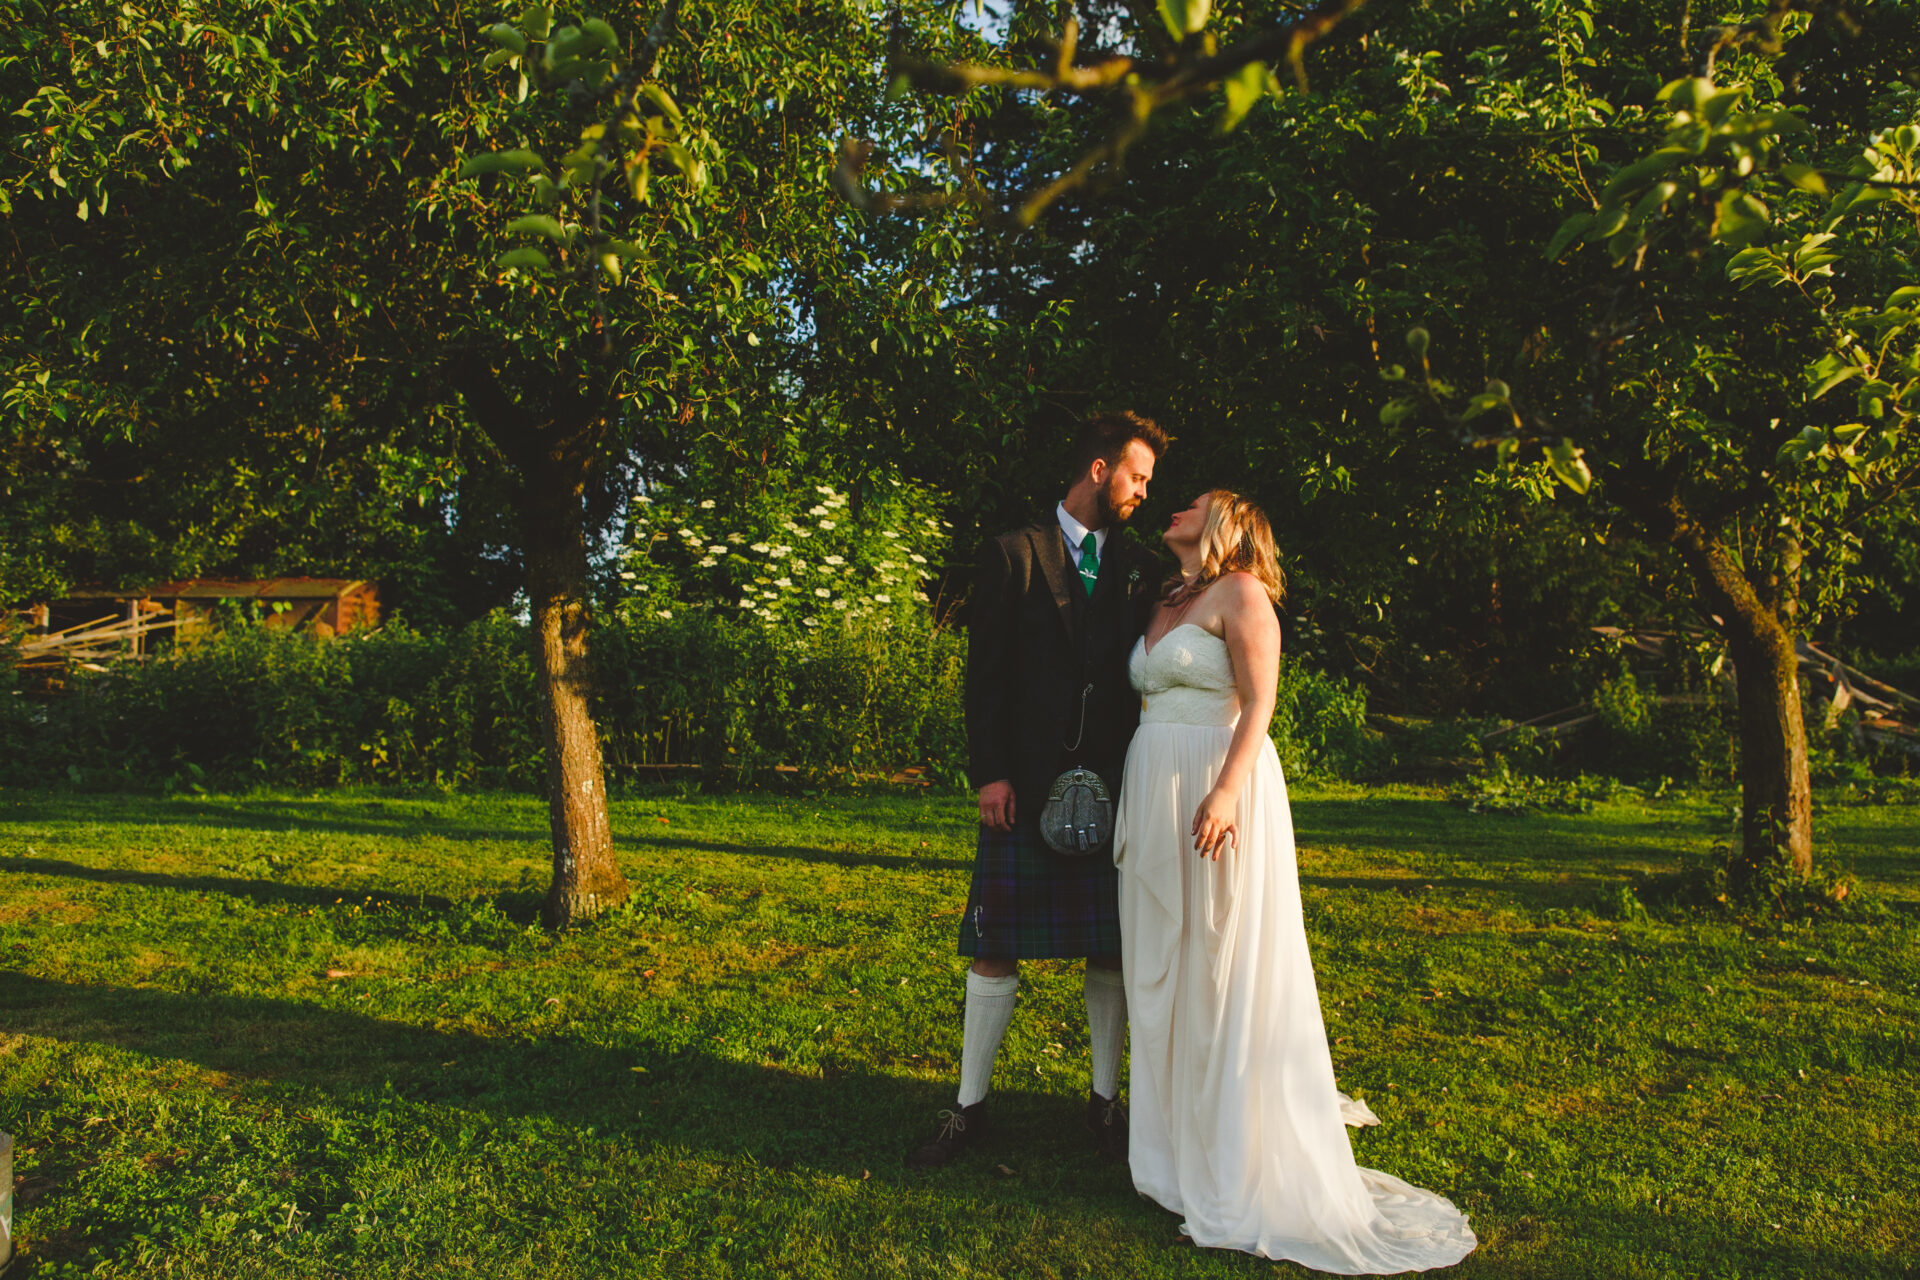 Bride and groom at barn wedding at Sullington Manor Farm, West Sussex, RH20 4AE. Farm wedding in South Downs.